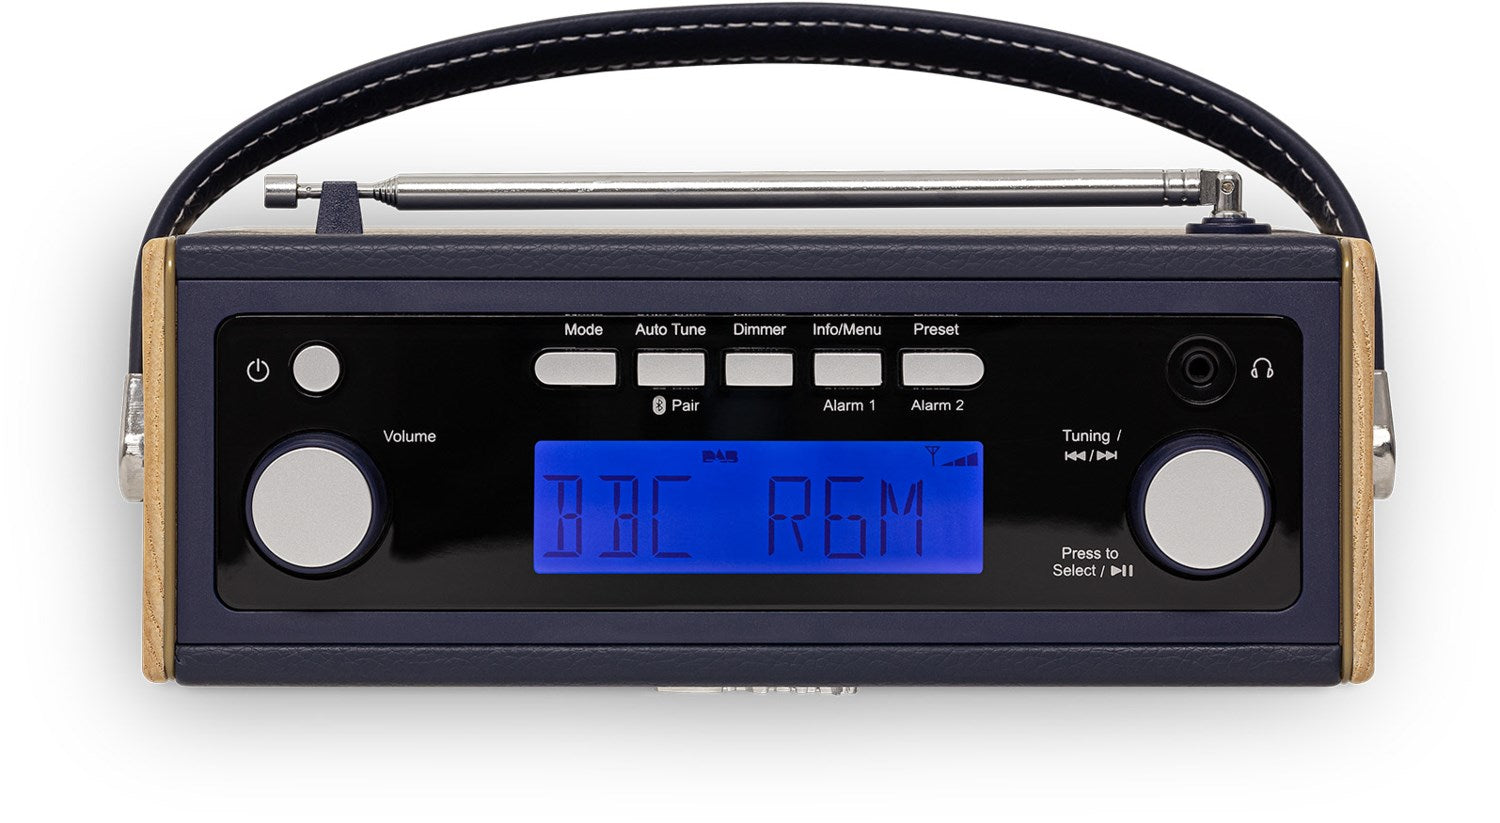 Roberts Roberts RamblerBTS DAB/DAB+/FM RDS Bluetooth Stereo Portable Radio - Navy Blue